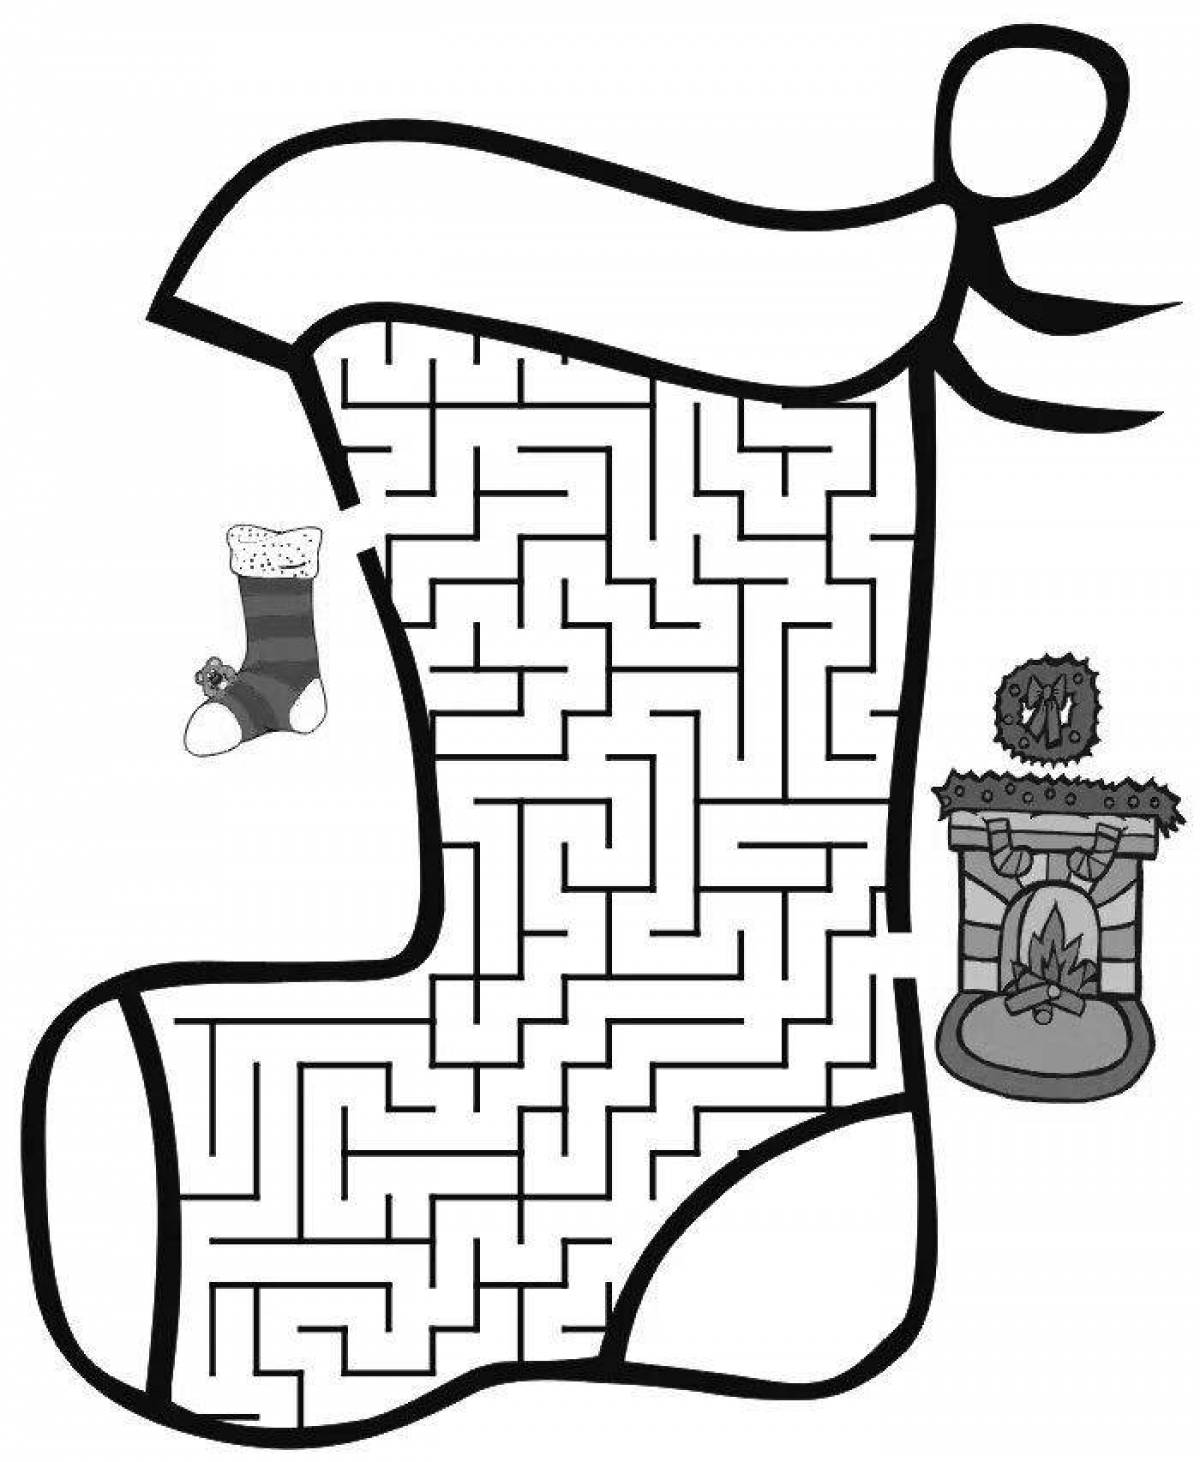 Inspirational Christmas maze